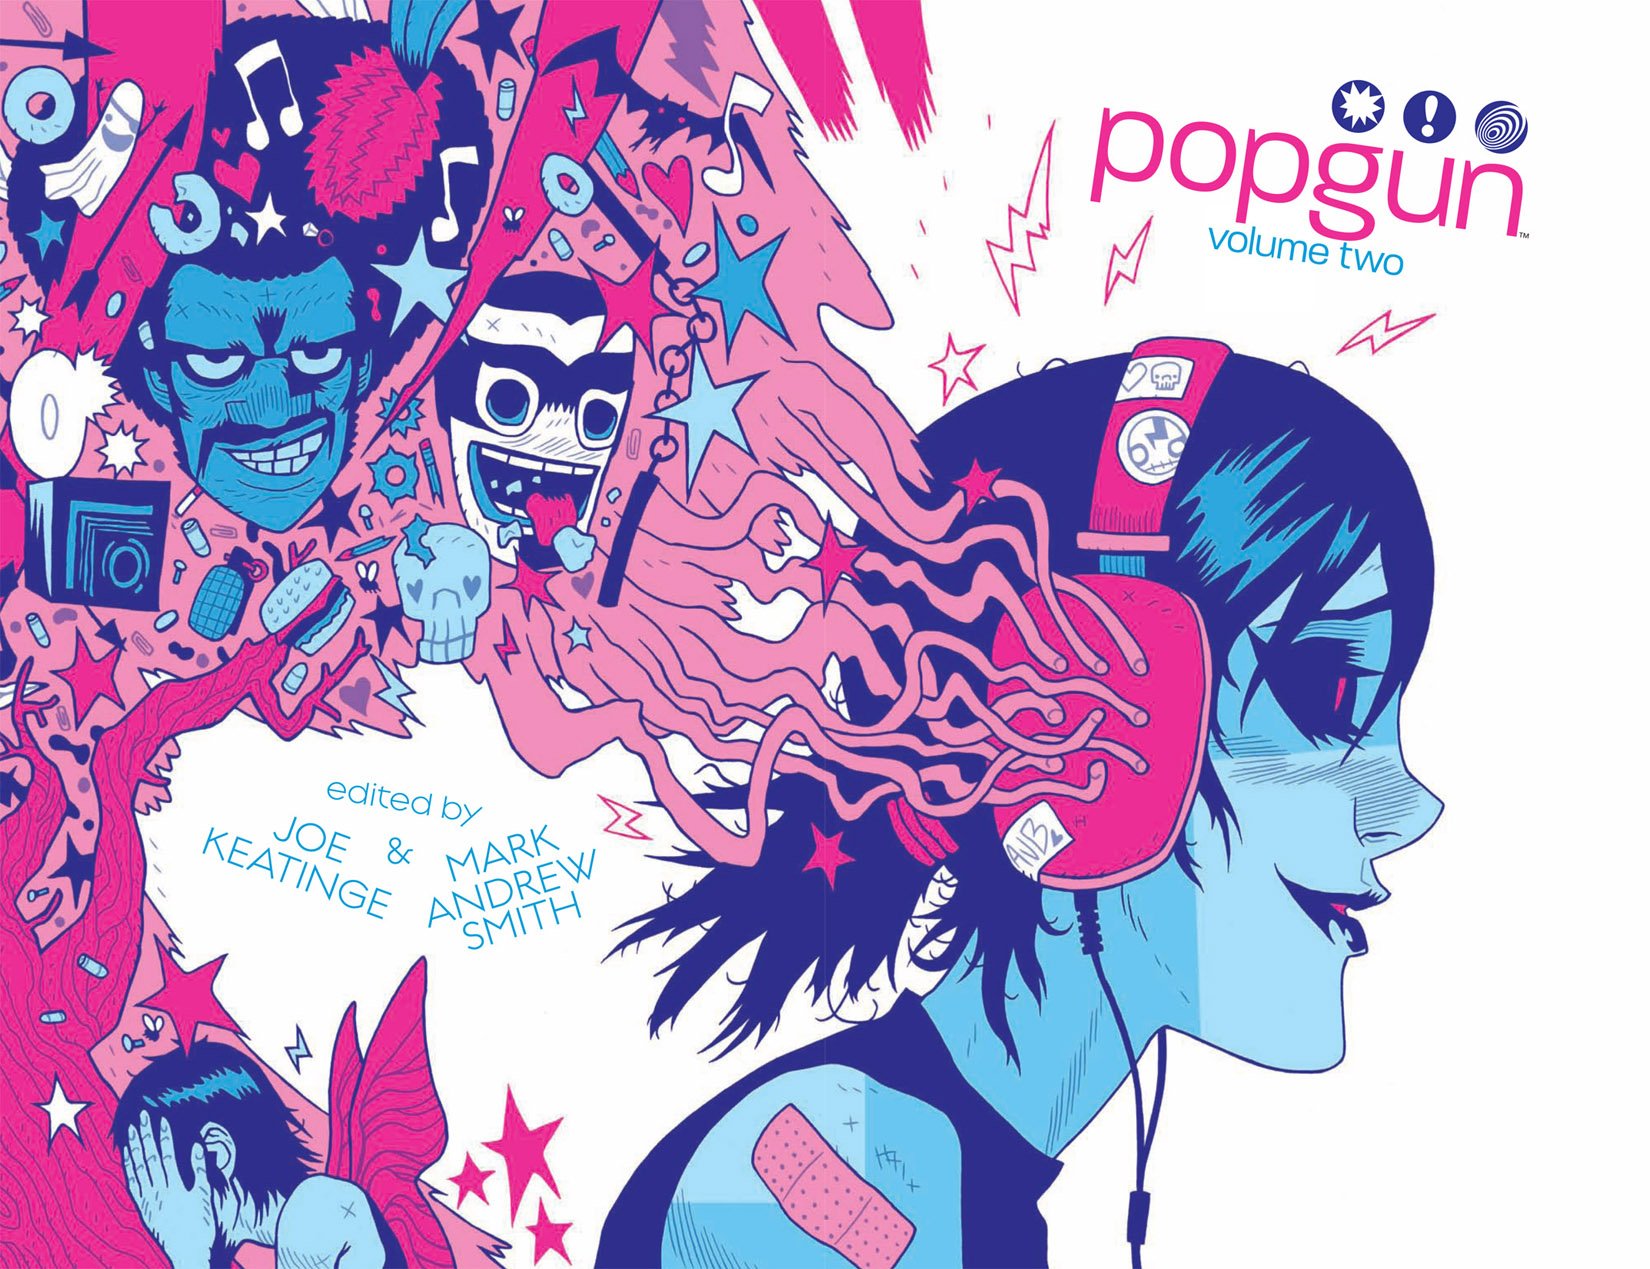 Read online PopGun comic -  Issue # Vol. 2 - 4